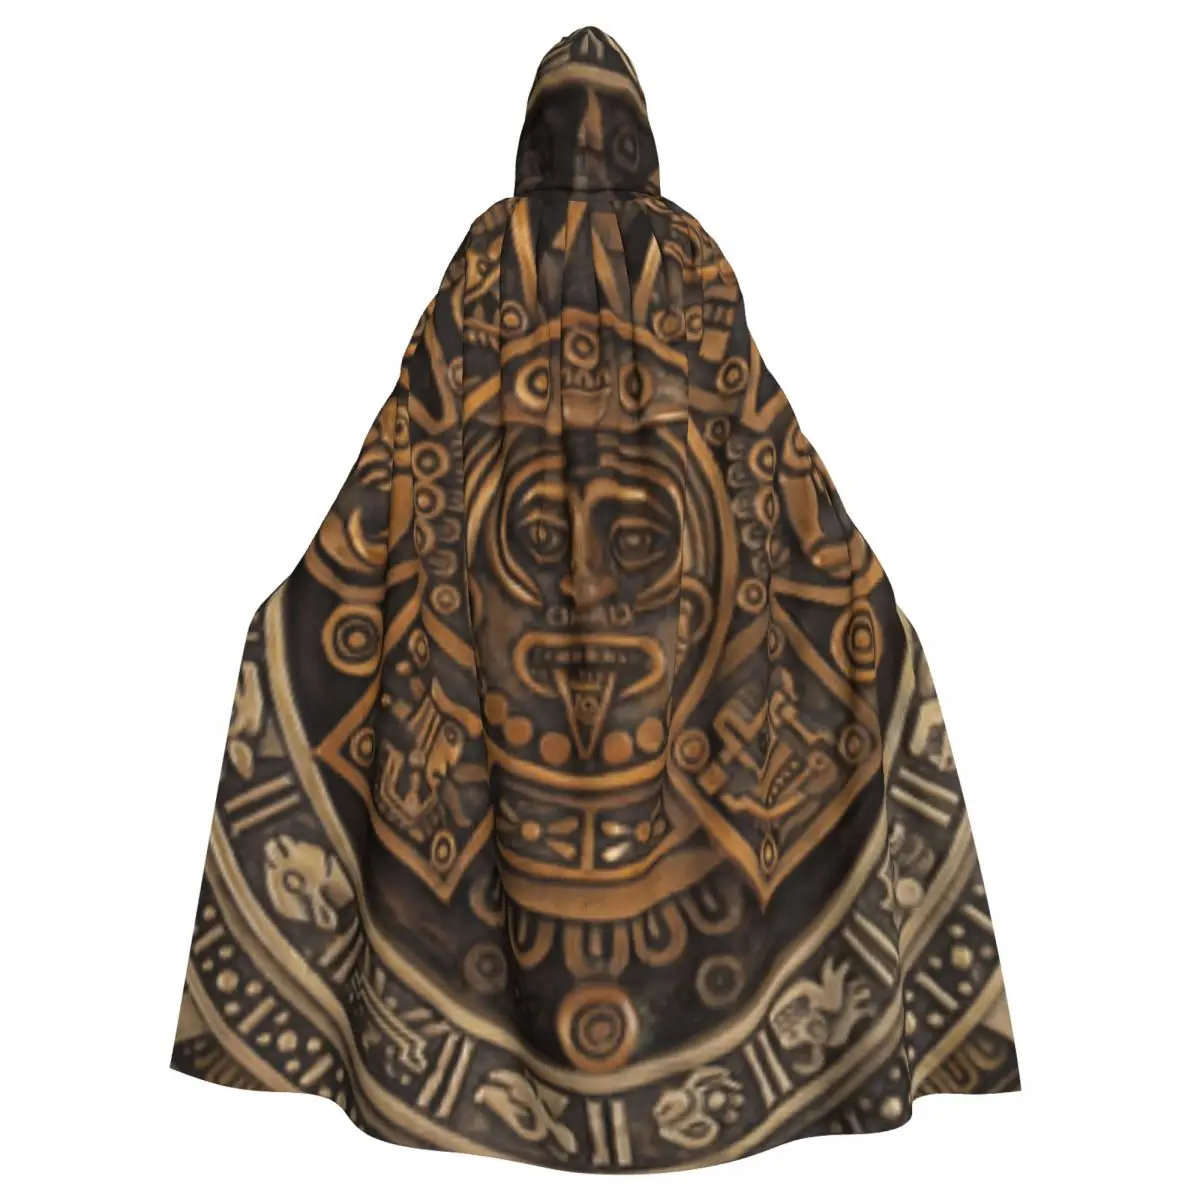 

Unisex Witch Party Reversible Hooded Adult Vampires Cape Cloak Ancient Aztec Calendar